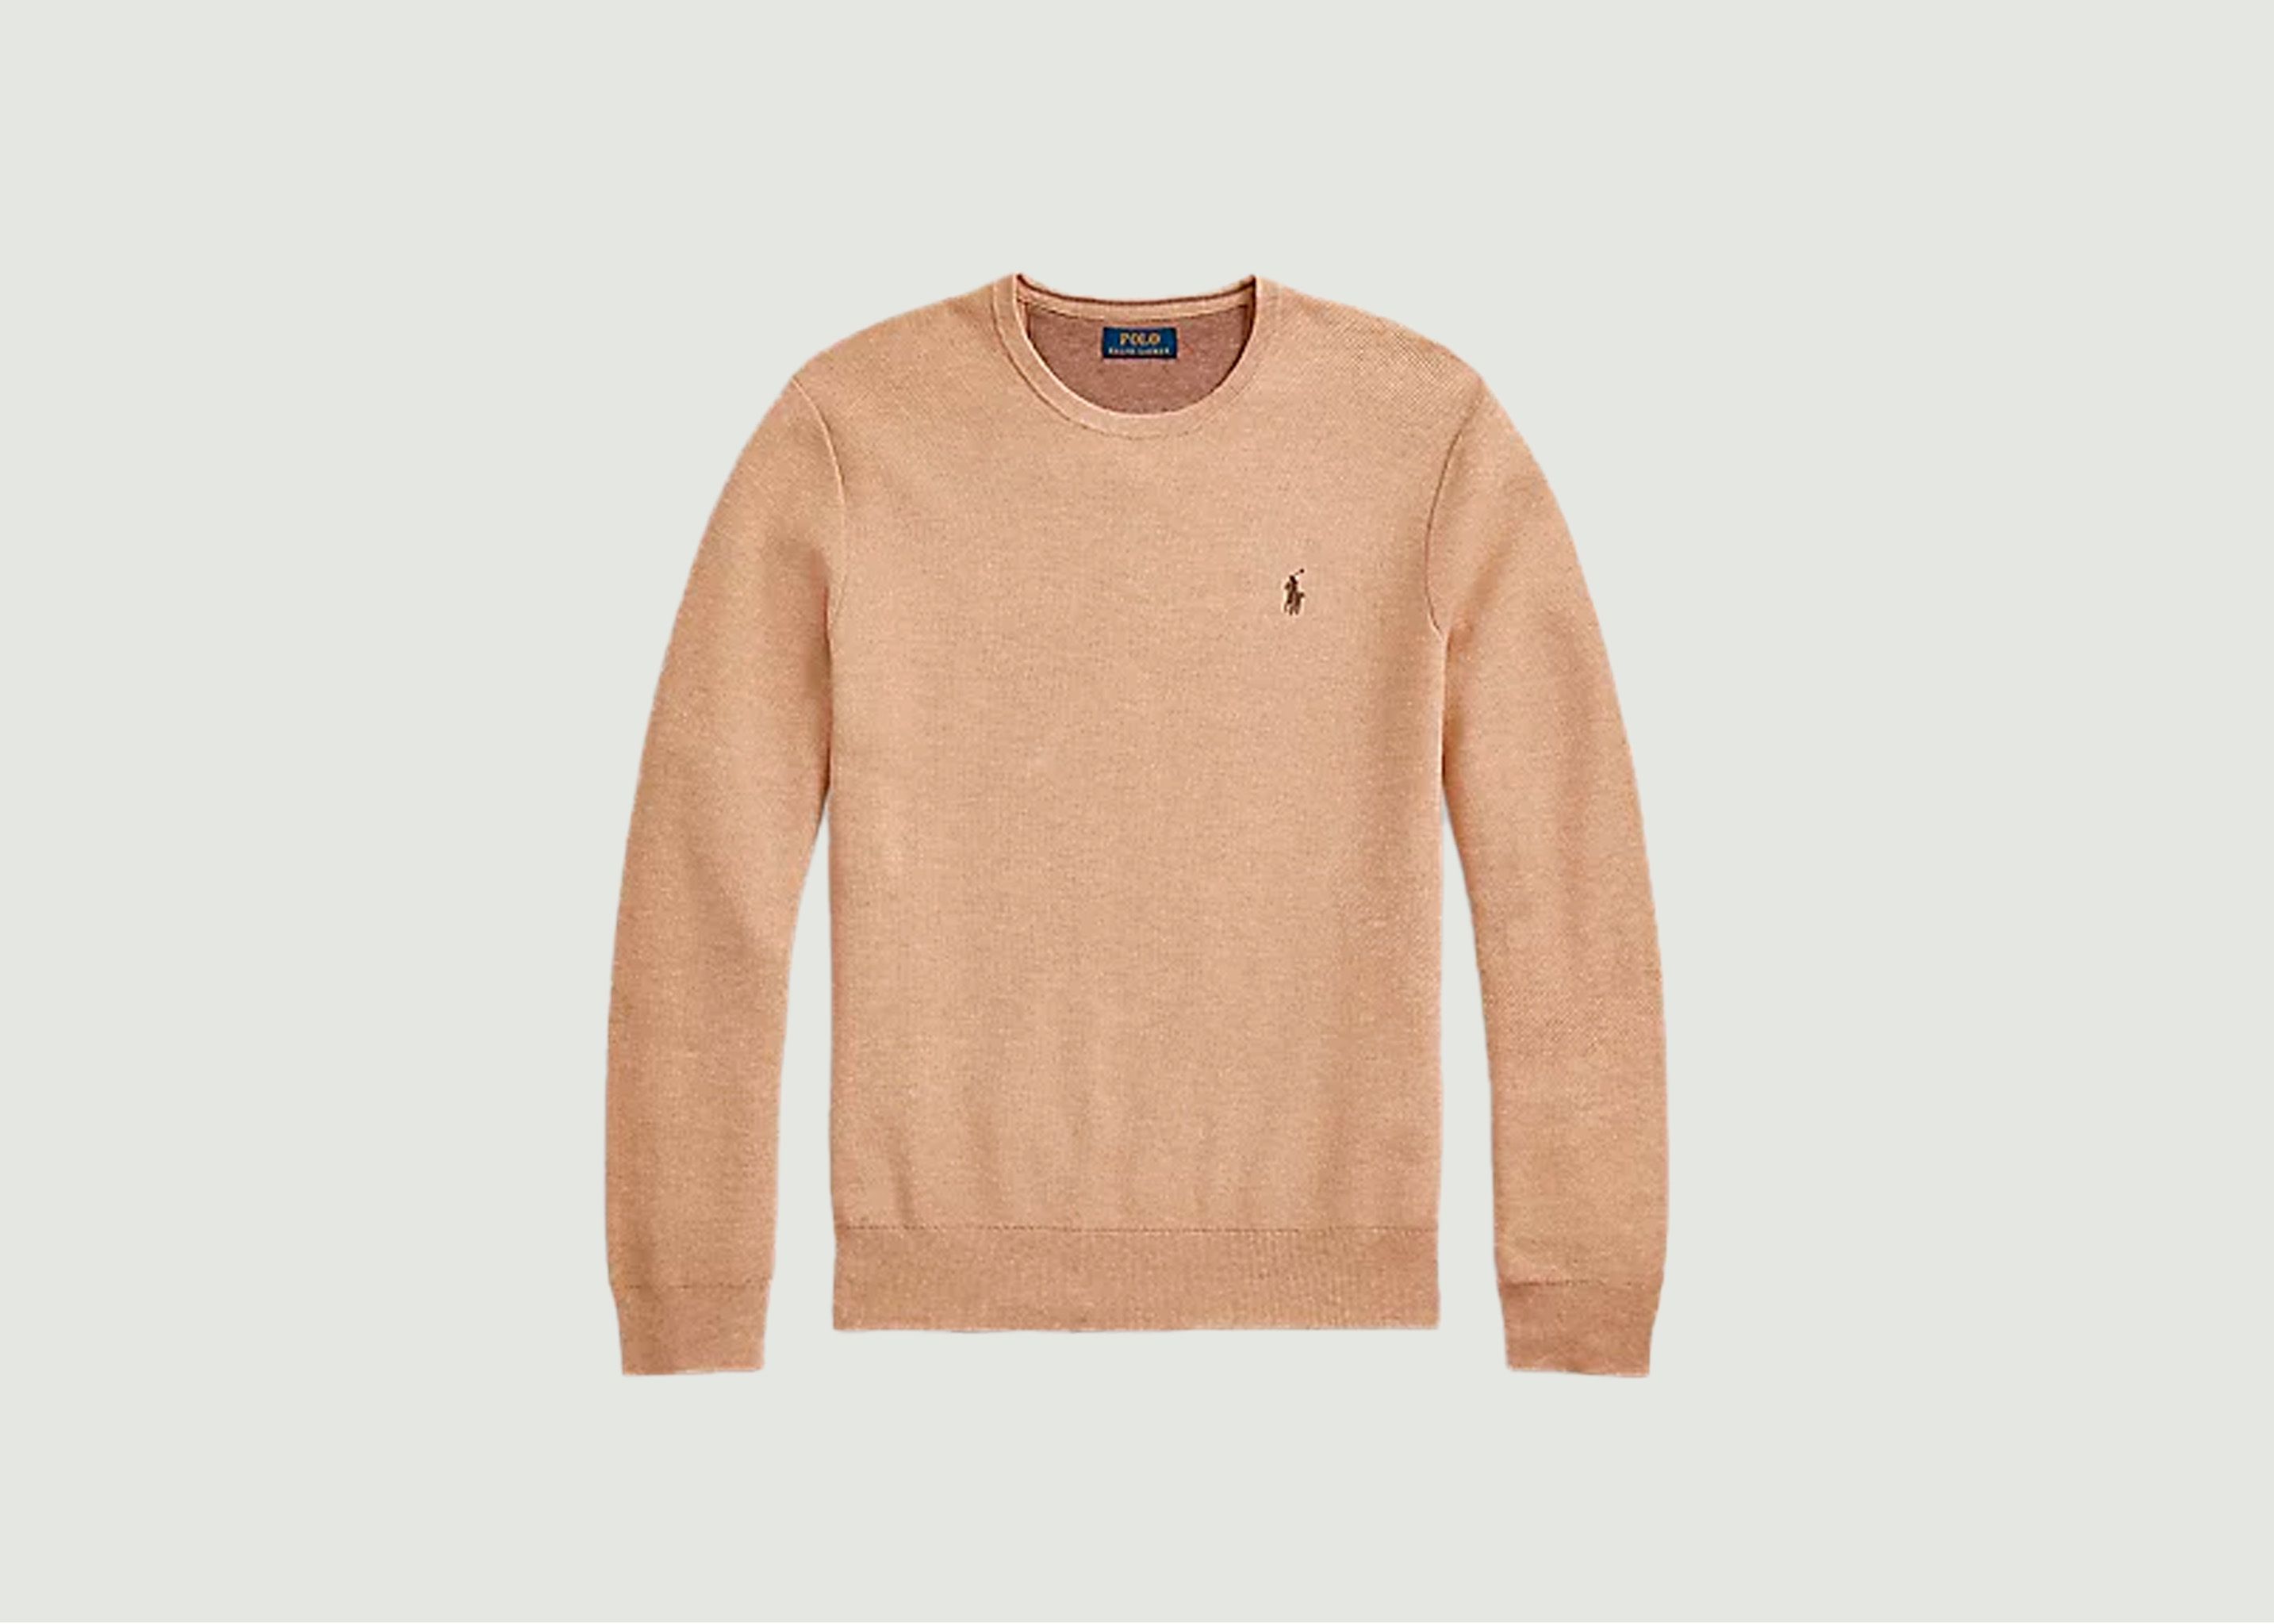 Cotton Sweater - Polo Ralph Lauren